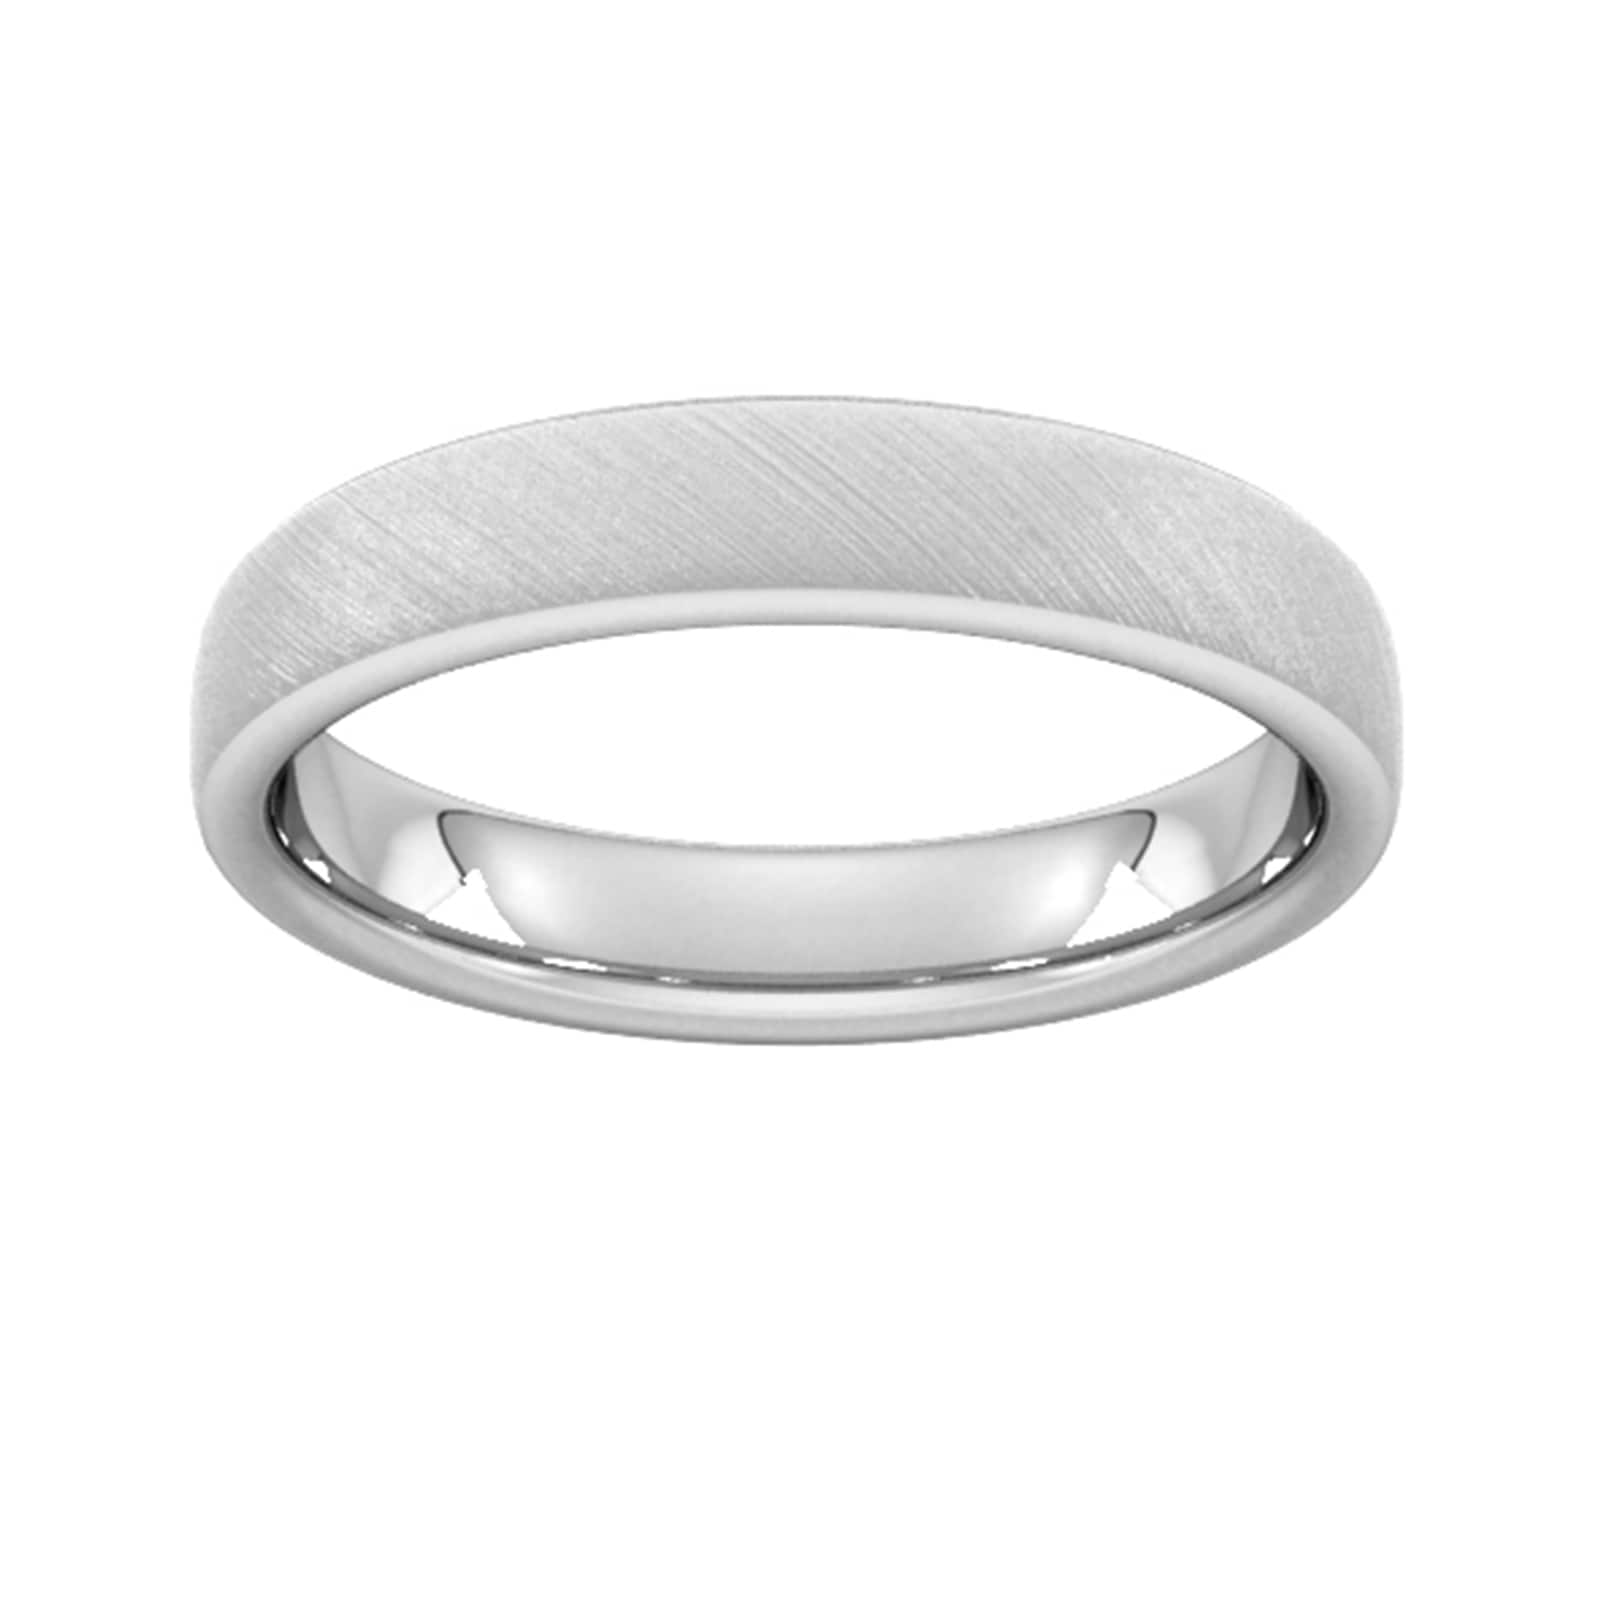 4mm Slight Court Extra Heavy Diagonal Matt Finish Wedding Ring In 9 Carat White Gold - Ring Size P